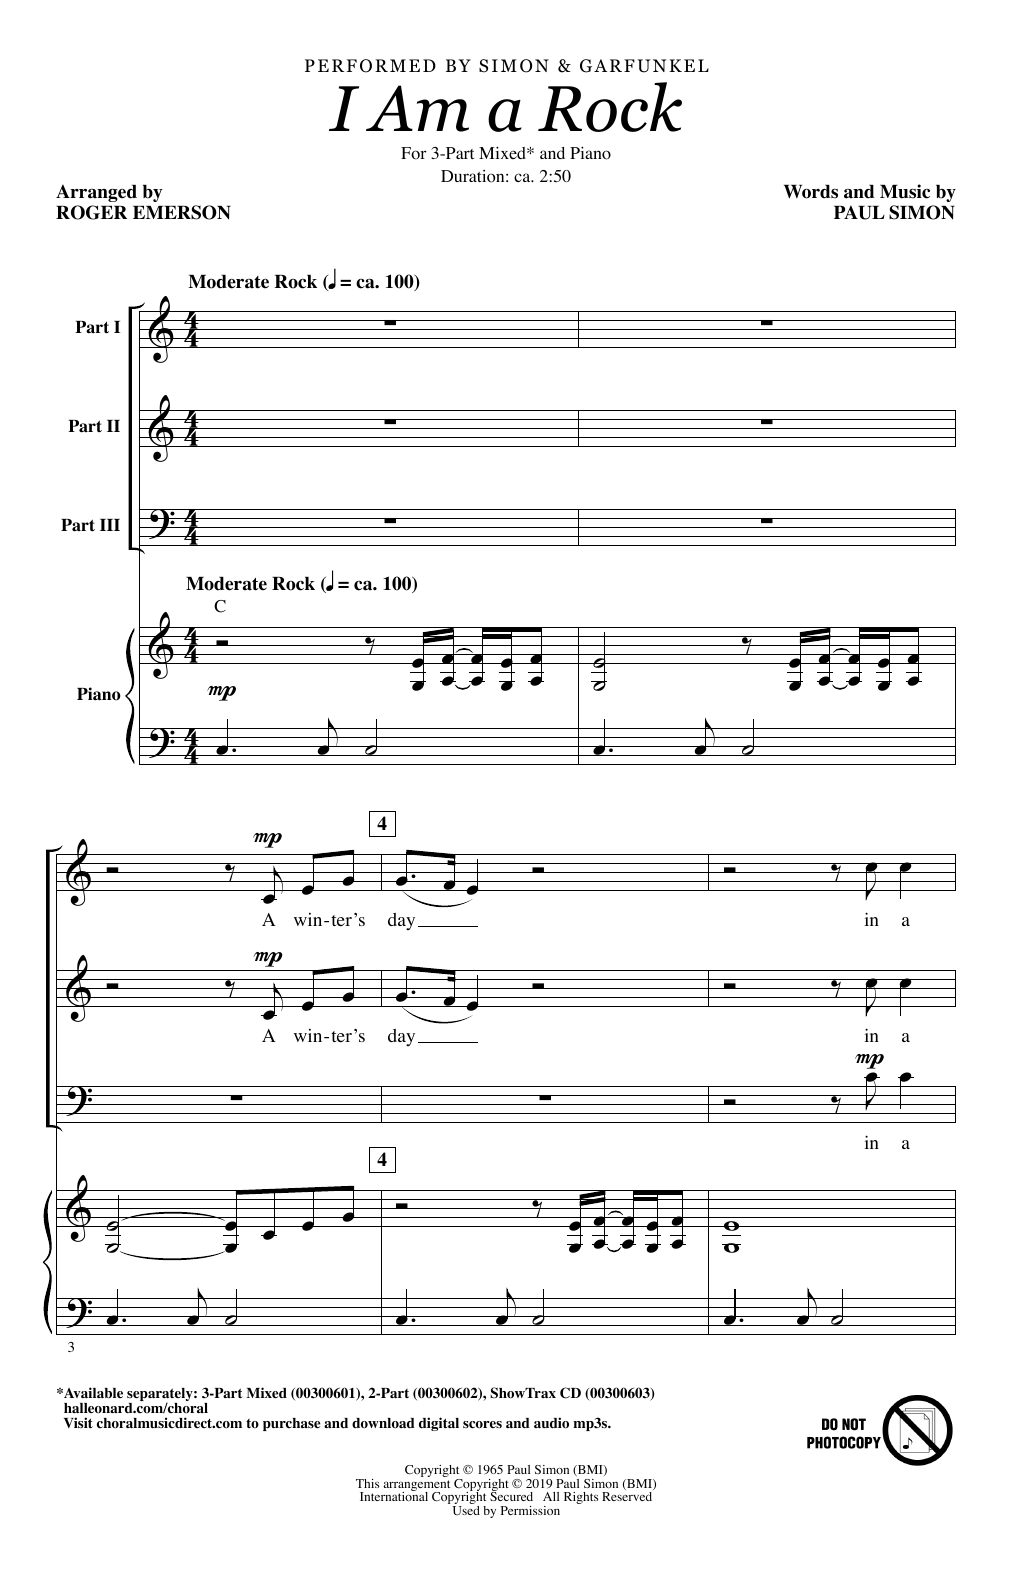 Simon & Garfunkel I Am A Rock (arr. Roger Emerson) Sheet Music Notes & Chords for 3-Part Mixed Choir - Download or Print PDF